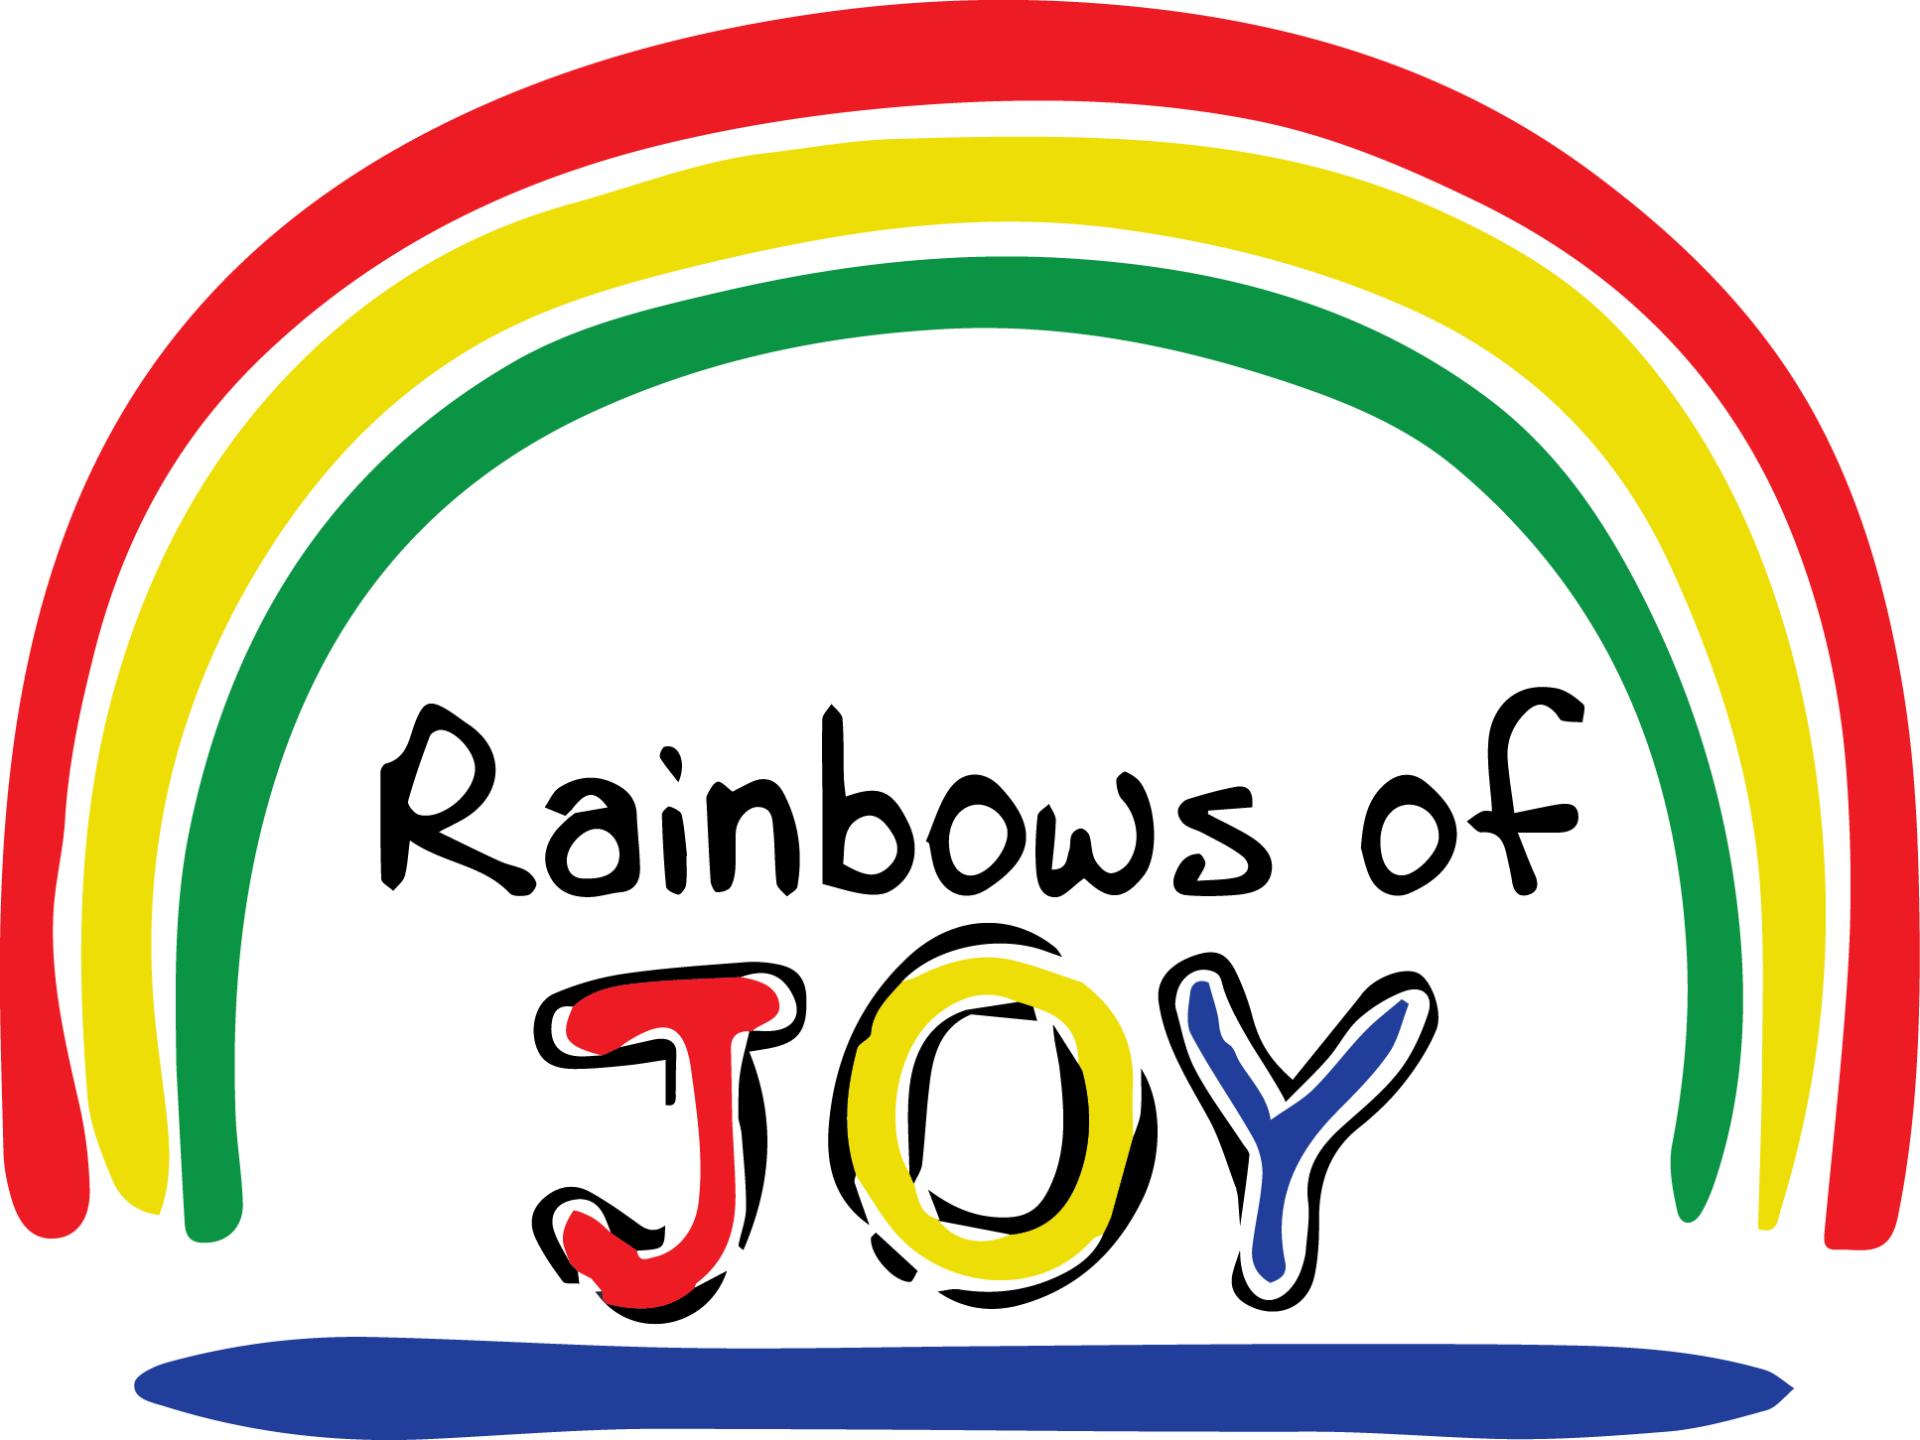 Rainbows of Joy